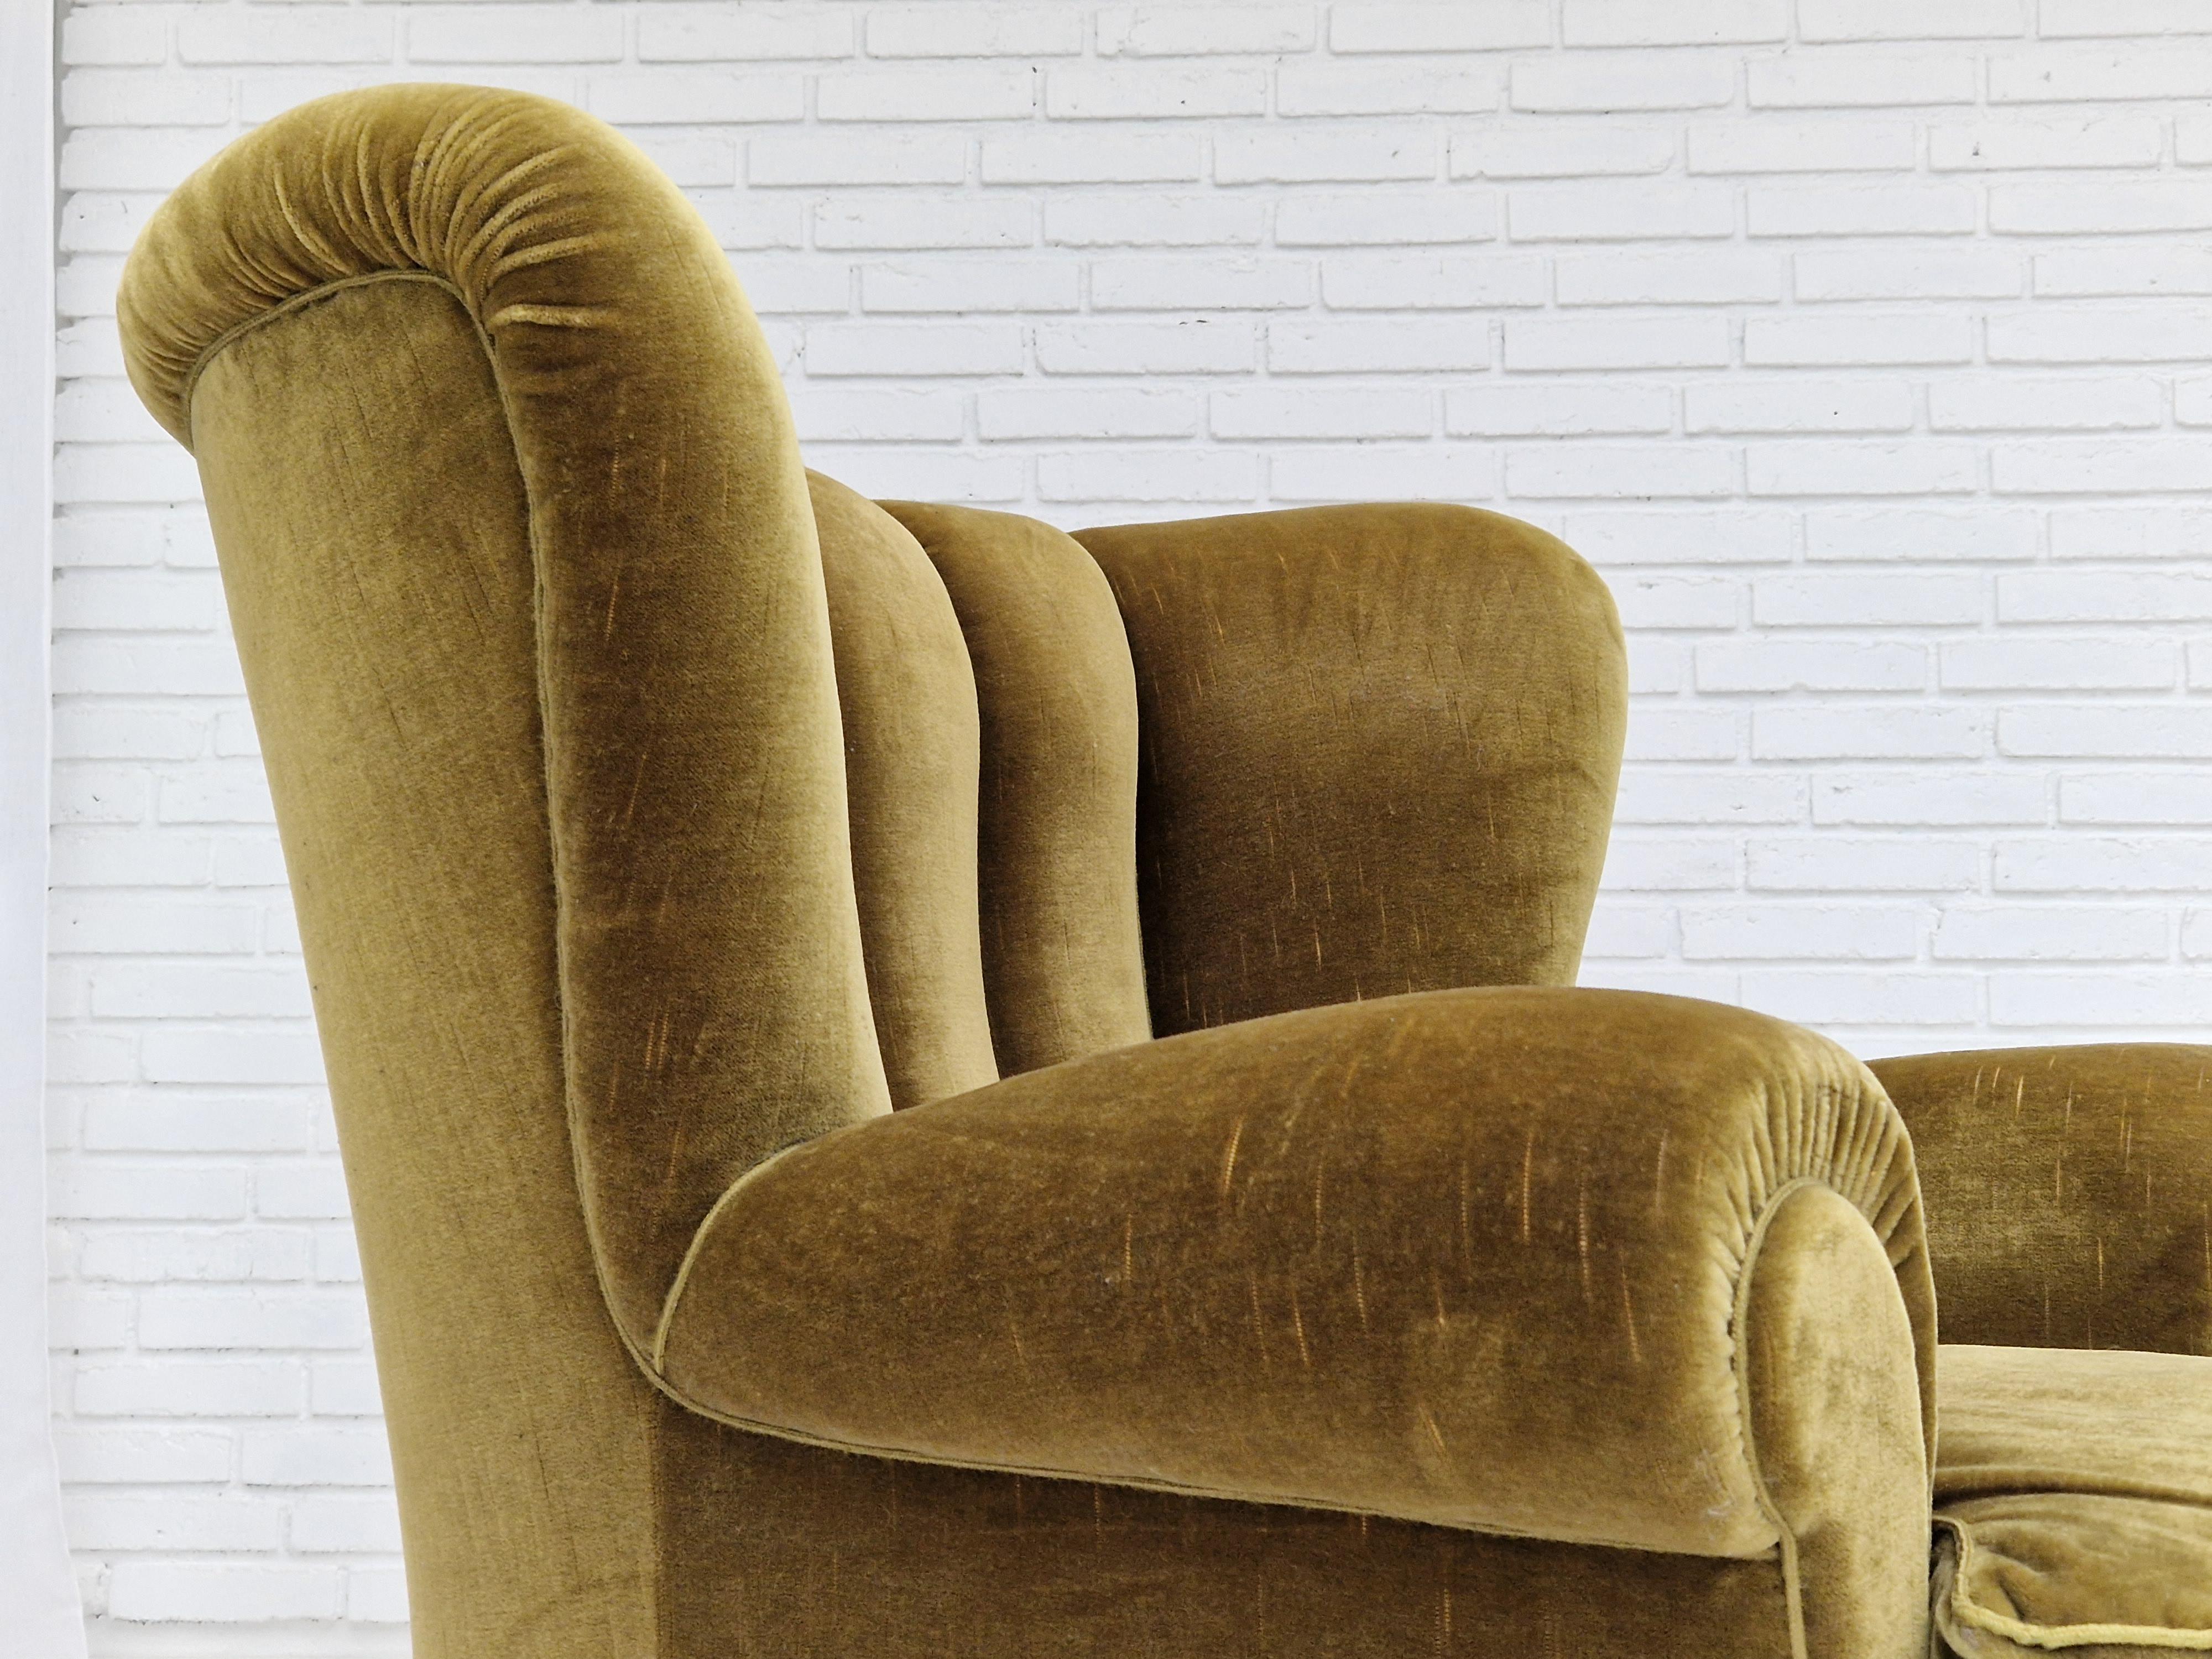 Velvet 1960s, Vintage Danish Relax Chair, Original Condition